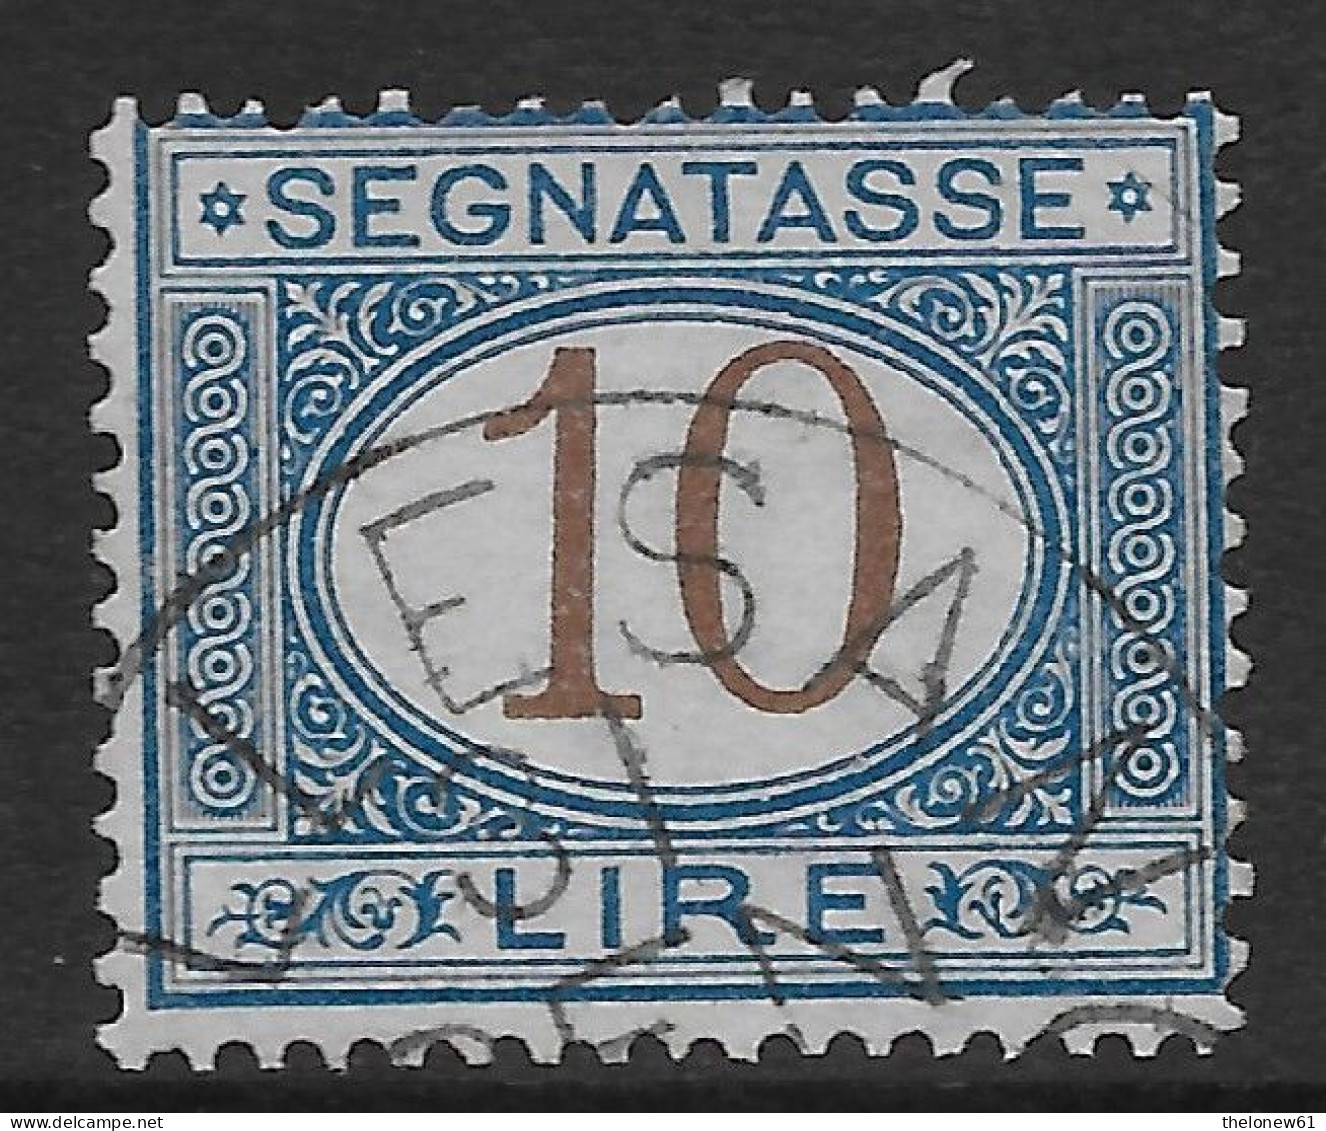 Italia Italy 1870 Regno Segnatasse L10 Sa N.S14 US - Segnatasse